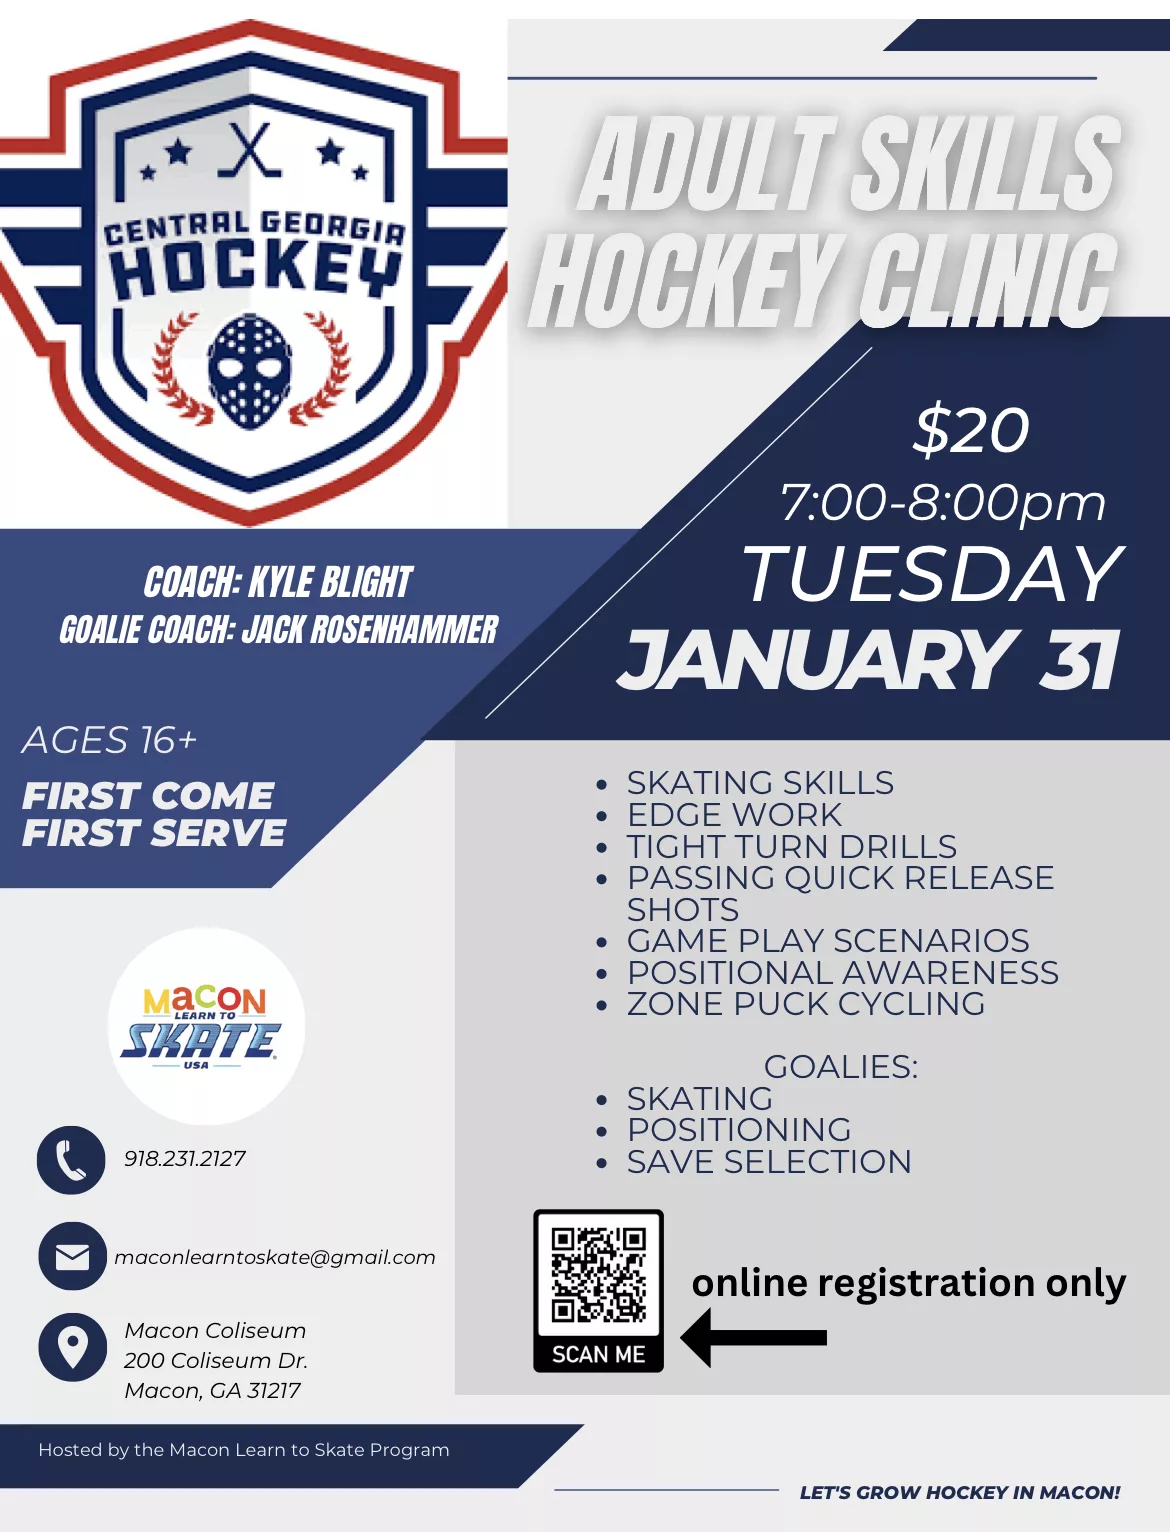 Register for Adult Skills Hockey Clinic